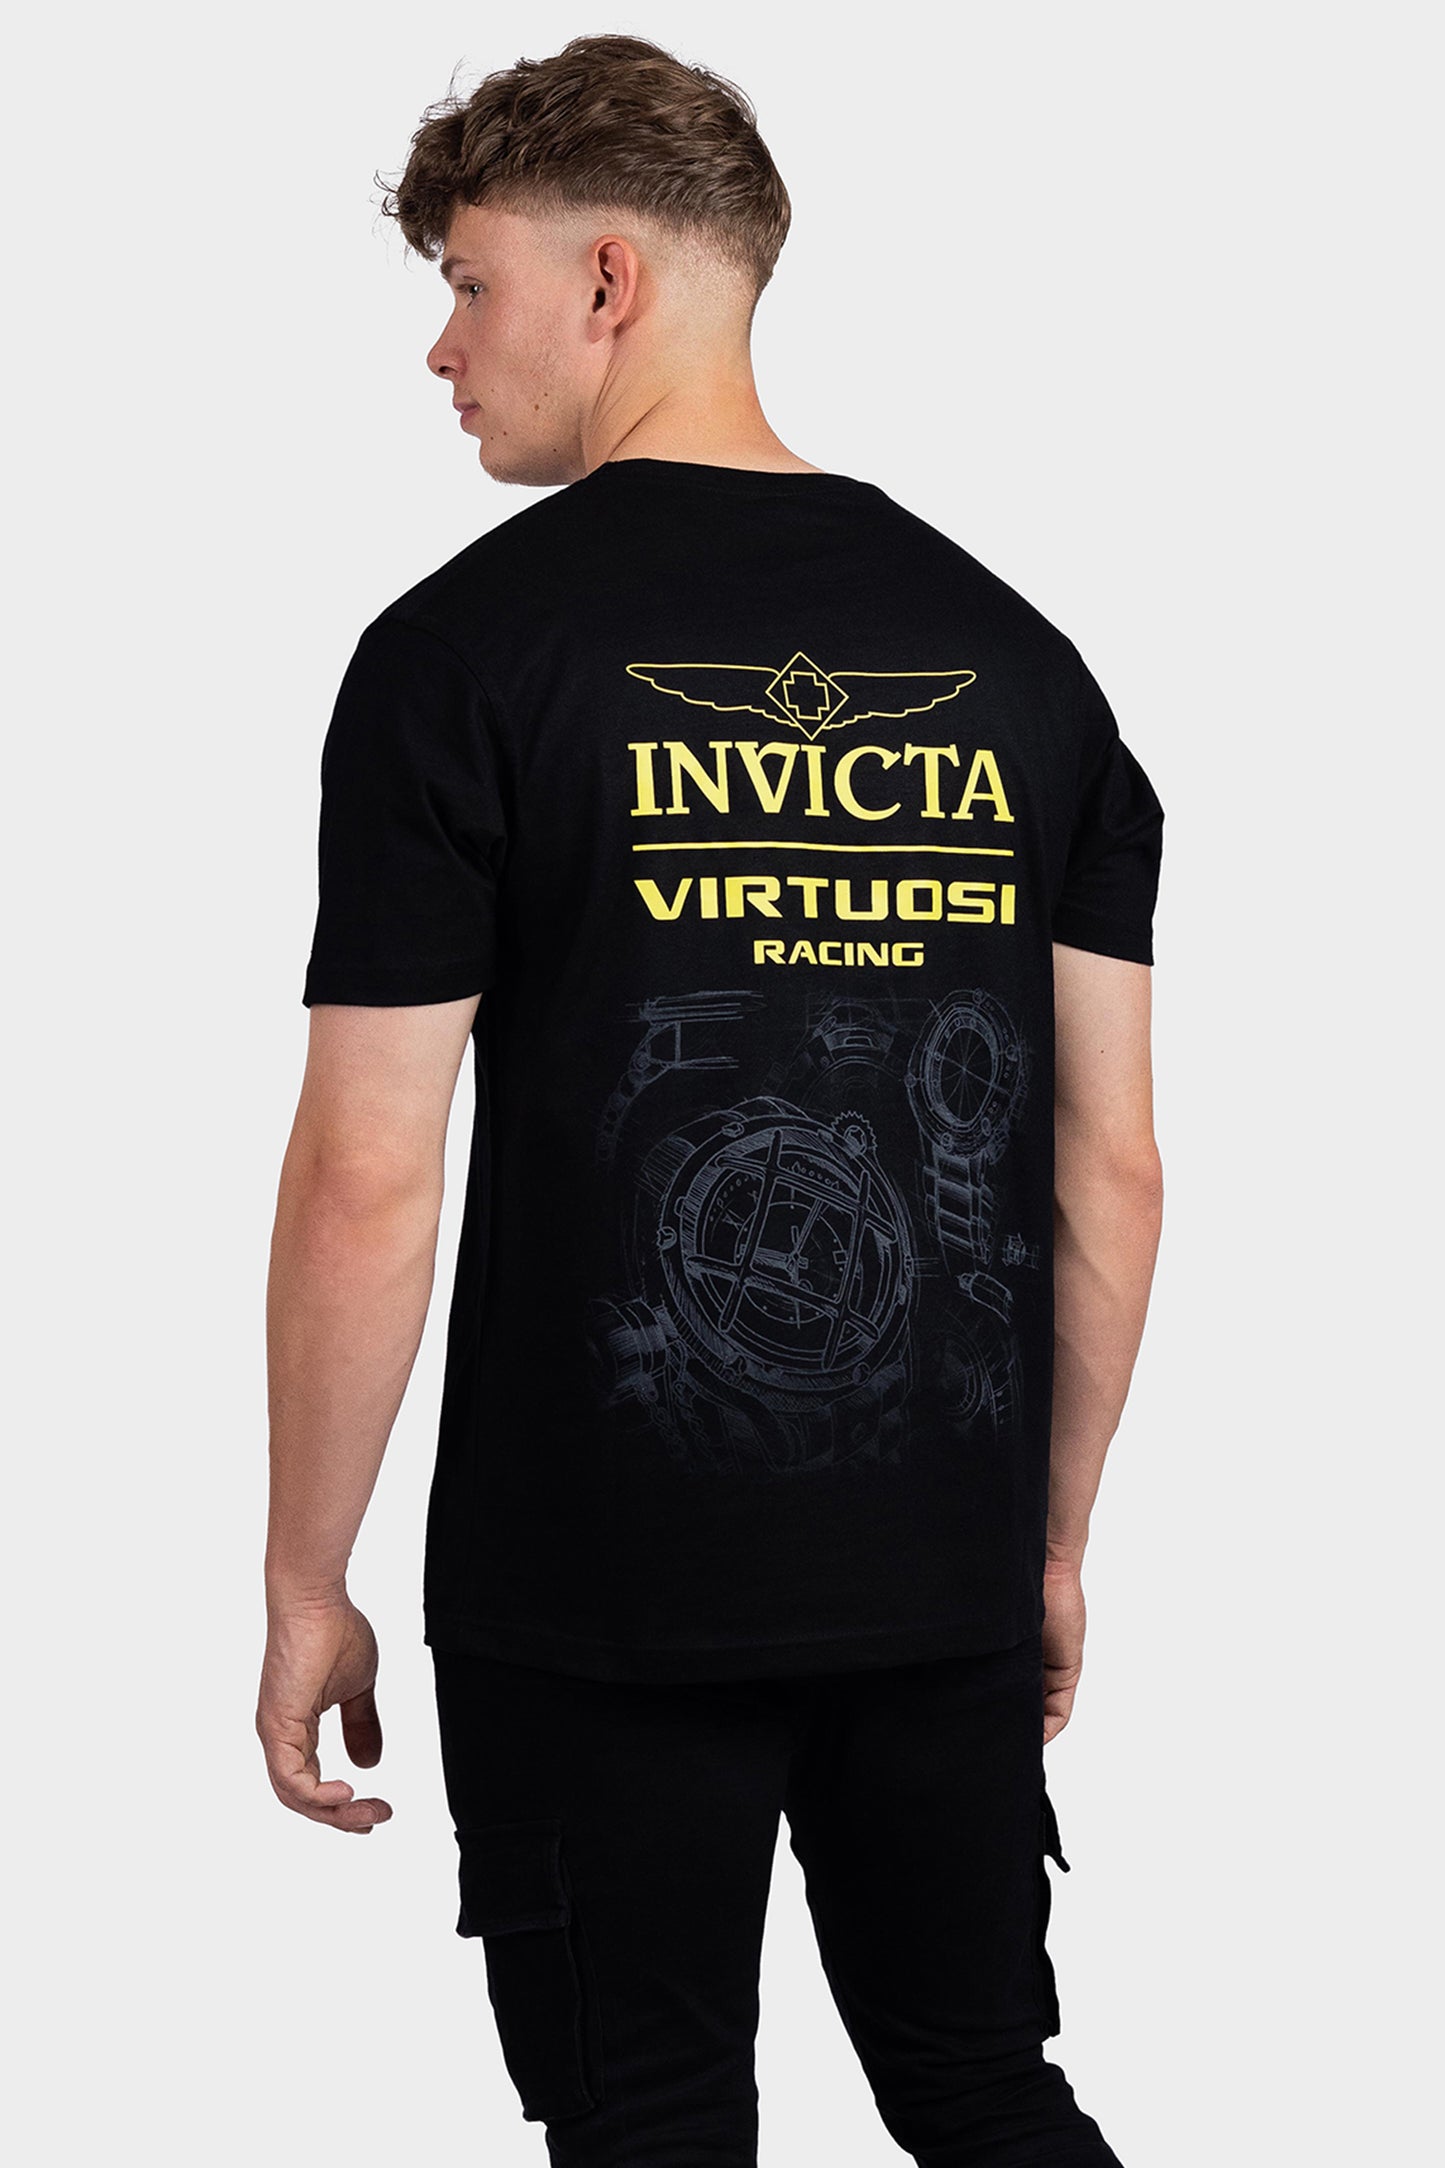 Invicta Virtuosi Team T-Shirt